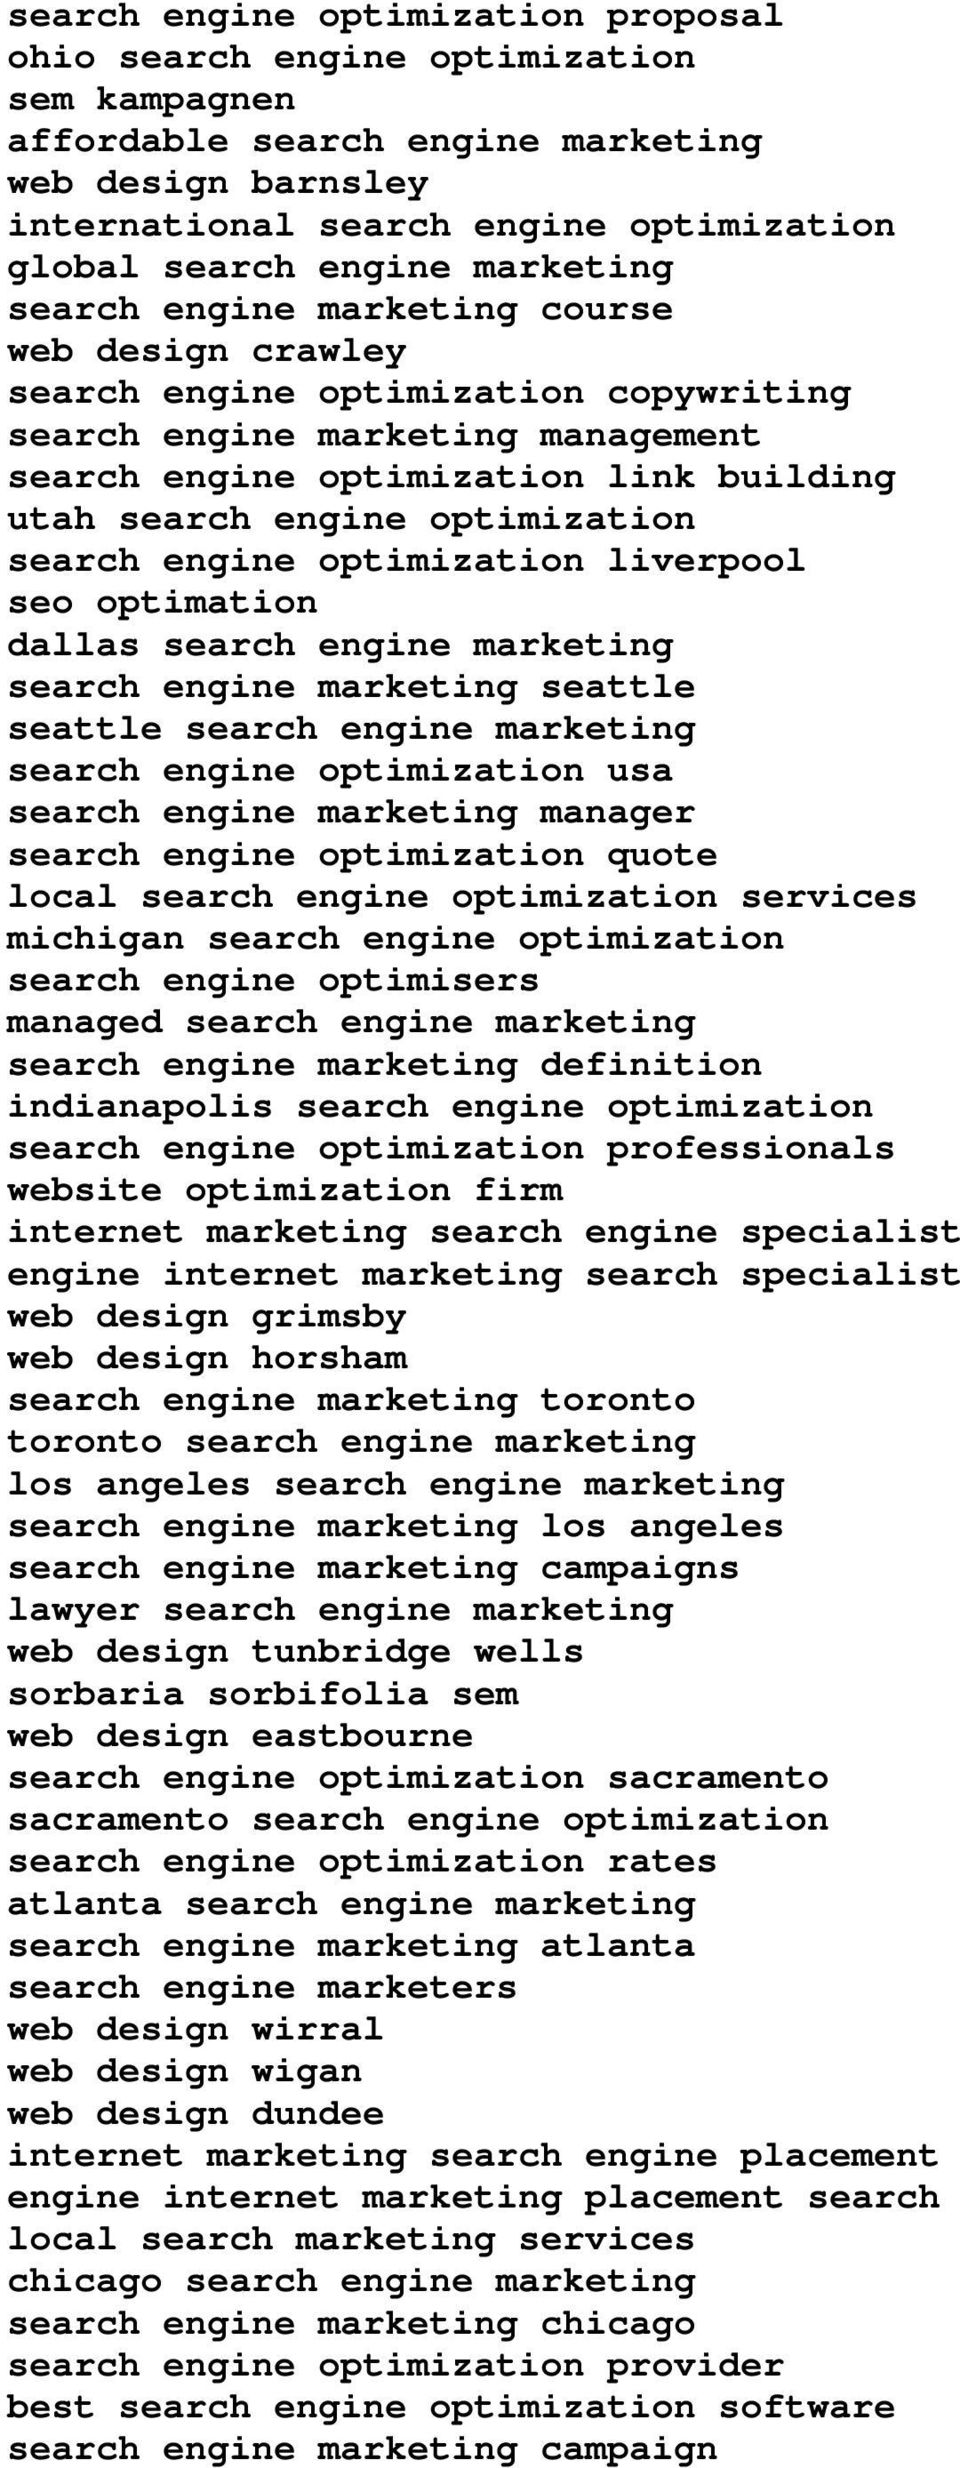 optimization search engine optimization liverpool seo optimation dallas search engine marketing search engine marketing seattle seattle search engine marketing search engine optimization usa search